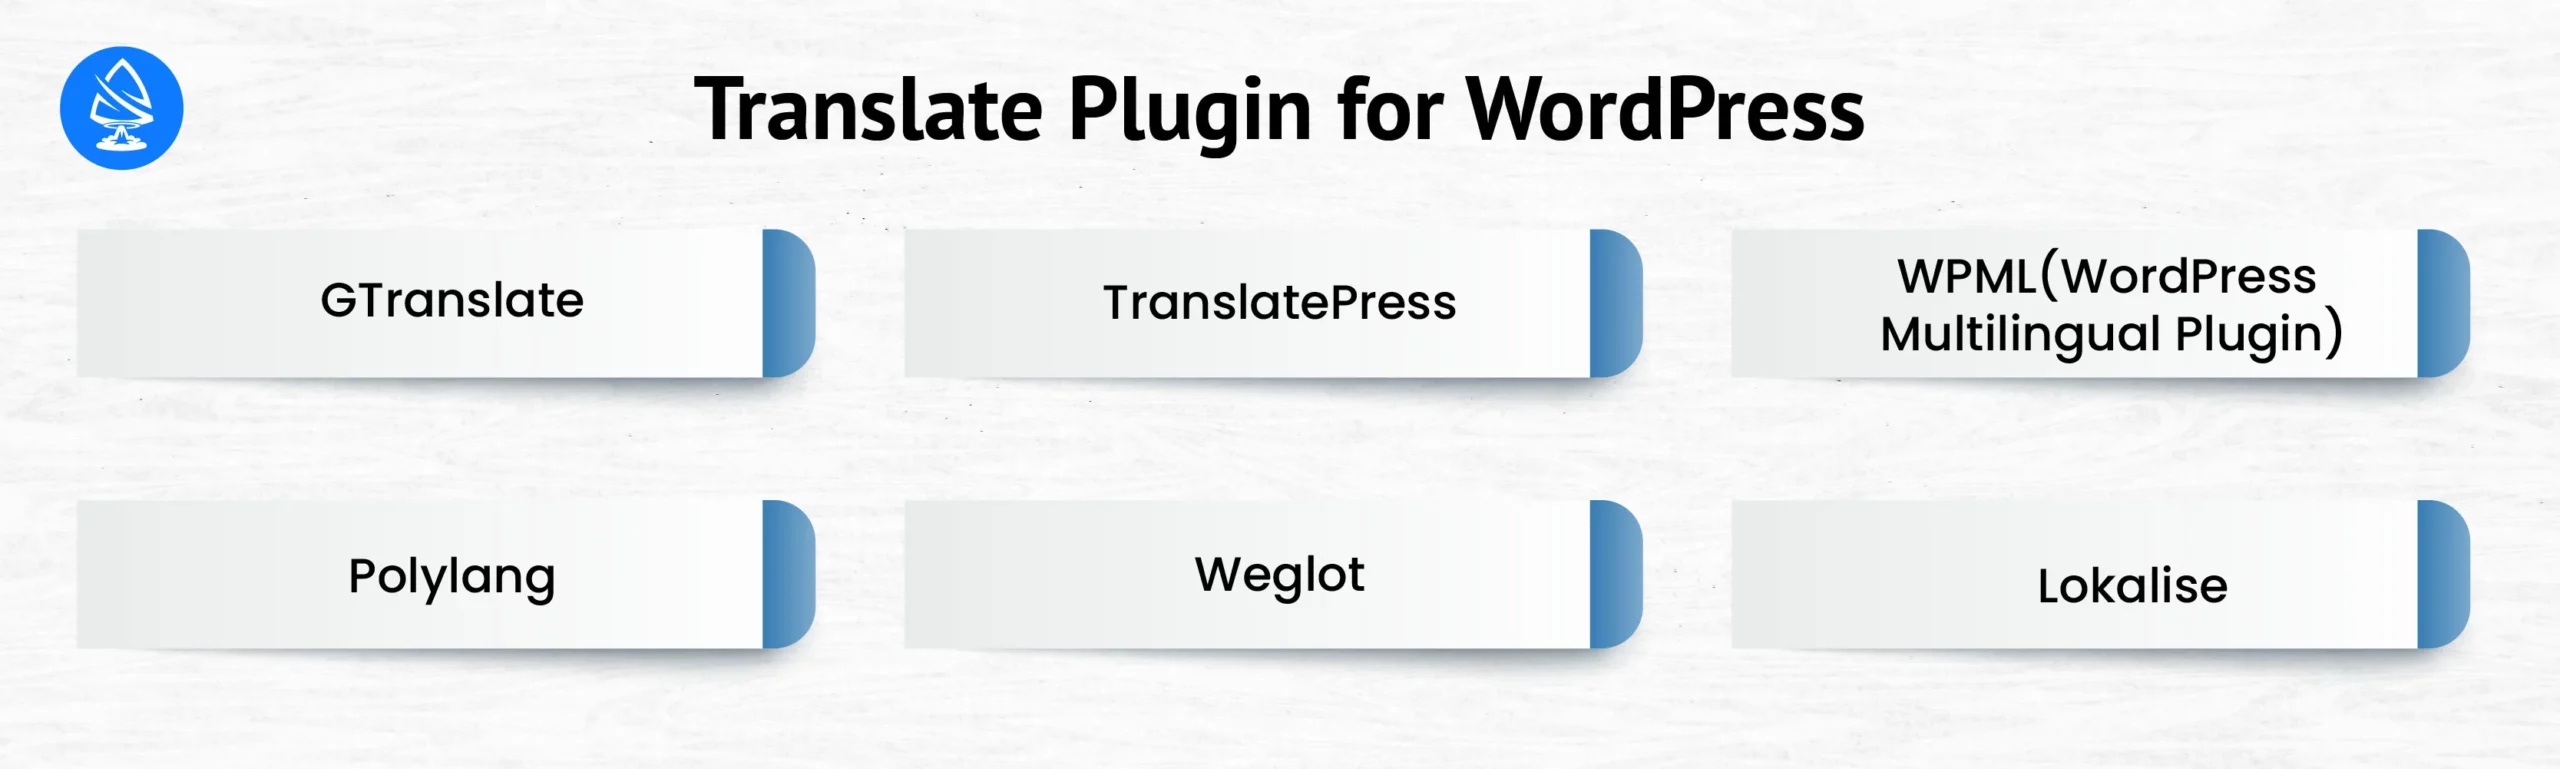 Translate Plugin for WordPress